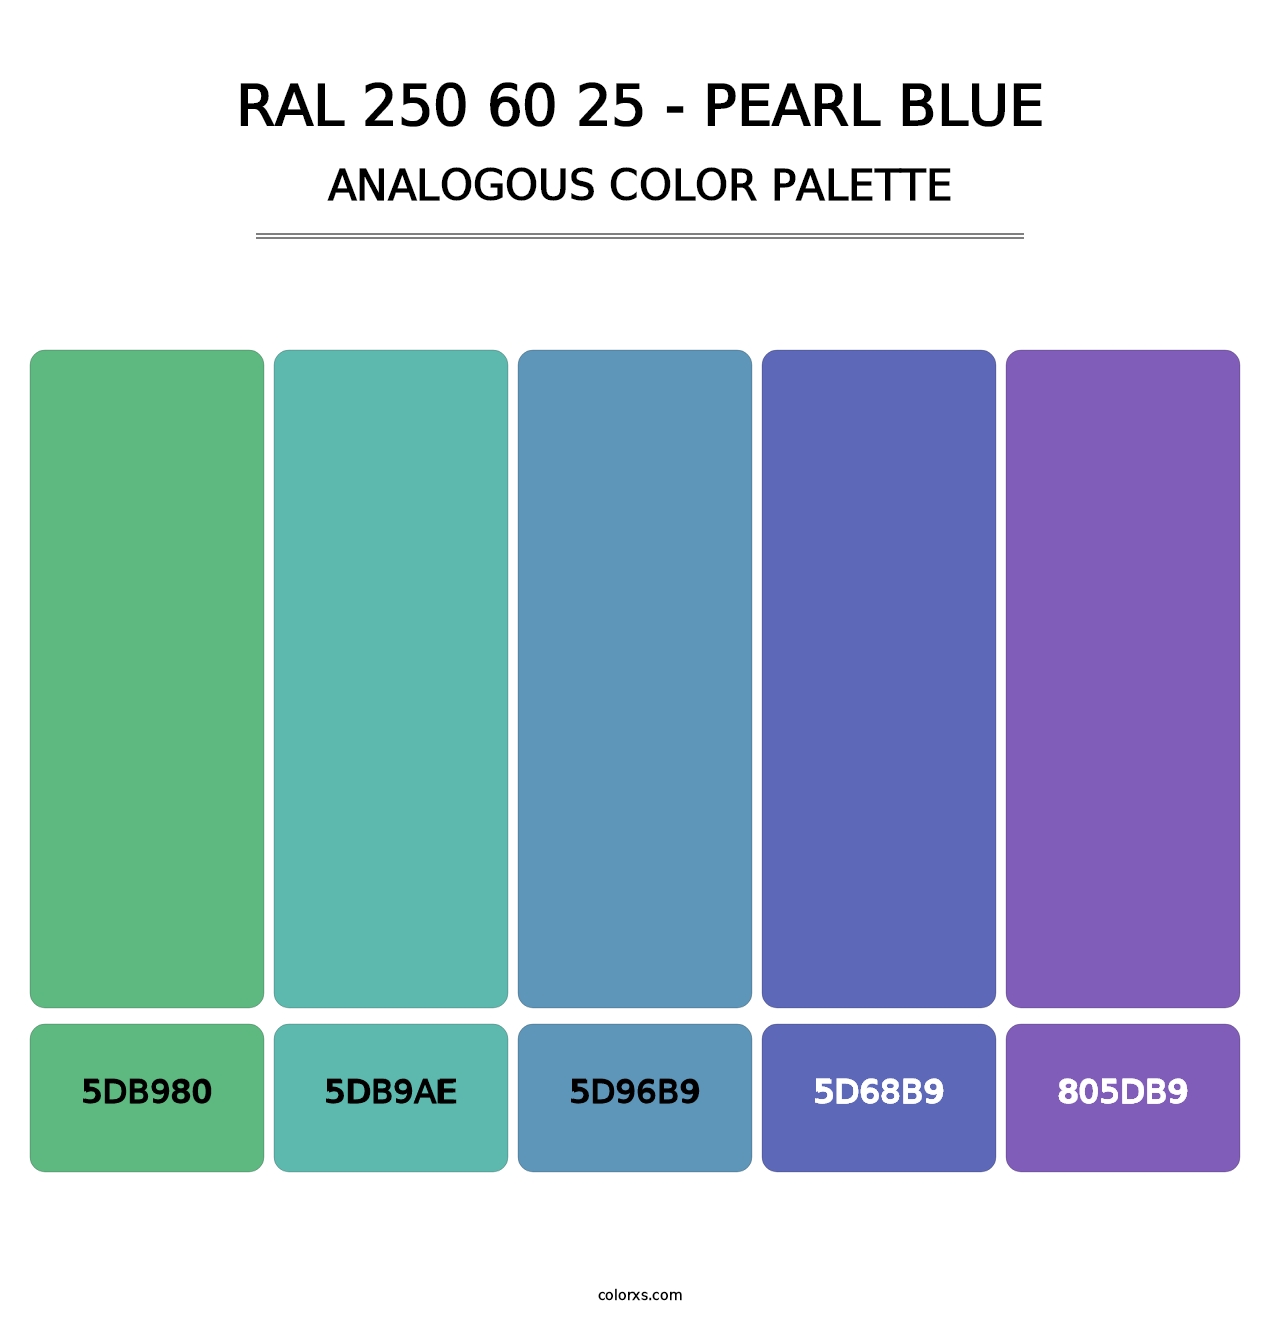 RAL 250 60 25 - Pearl Blue - Analogous Color Palette